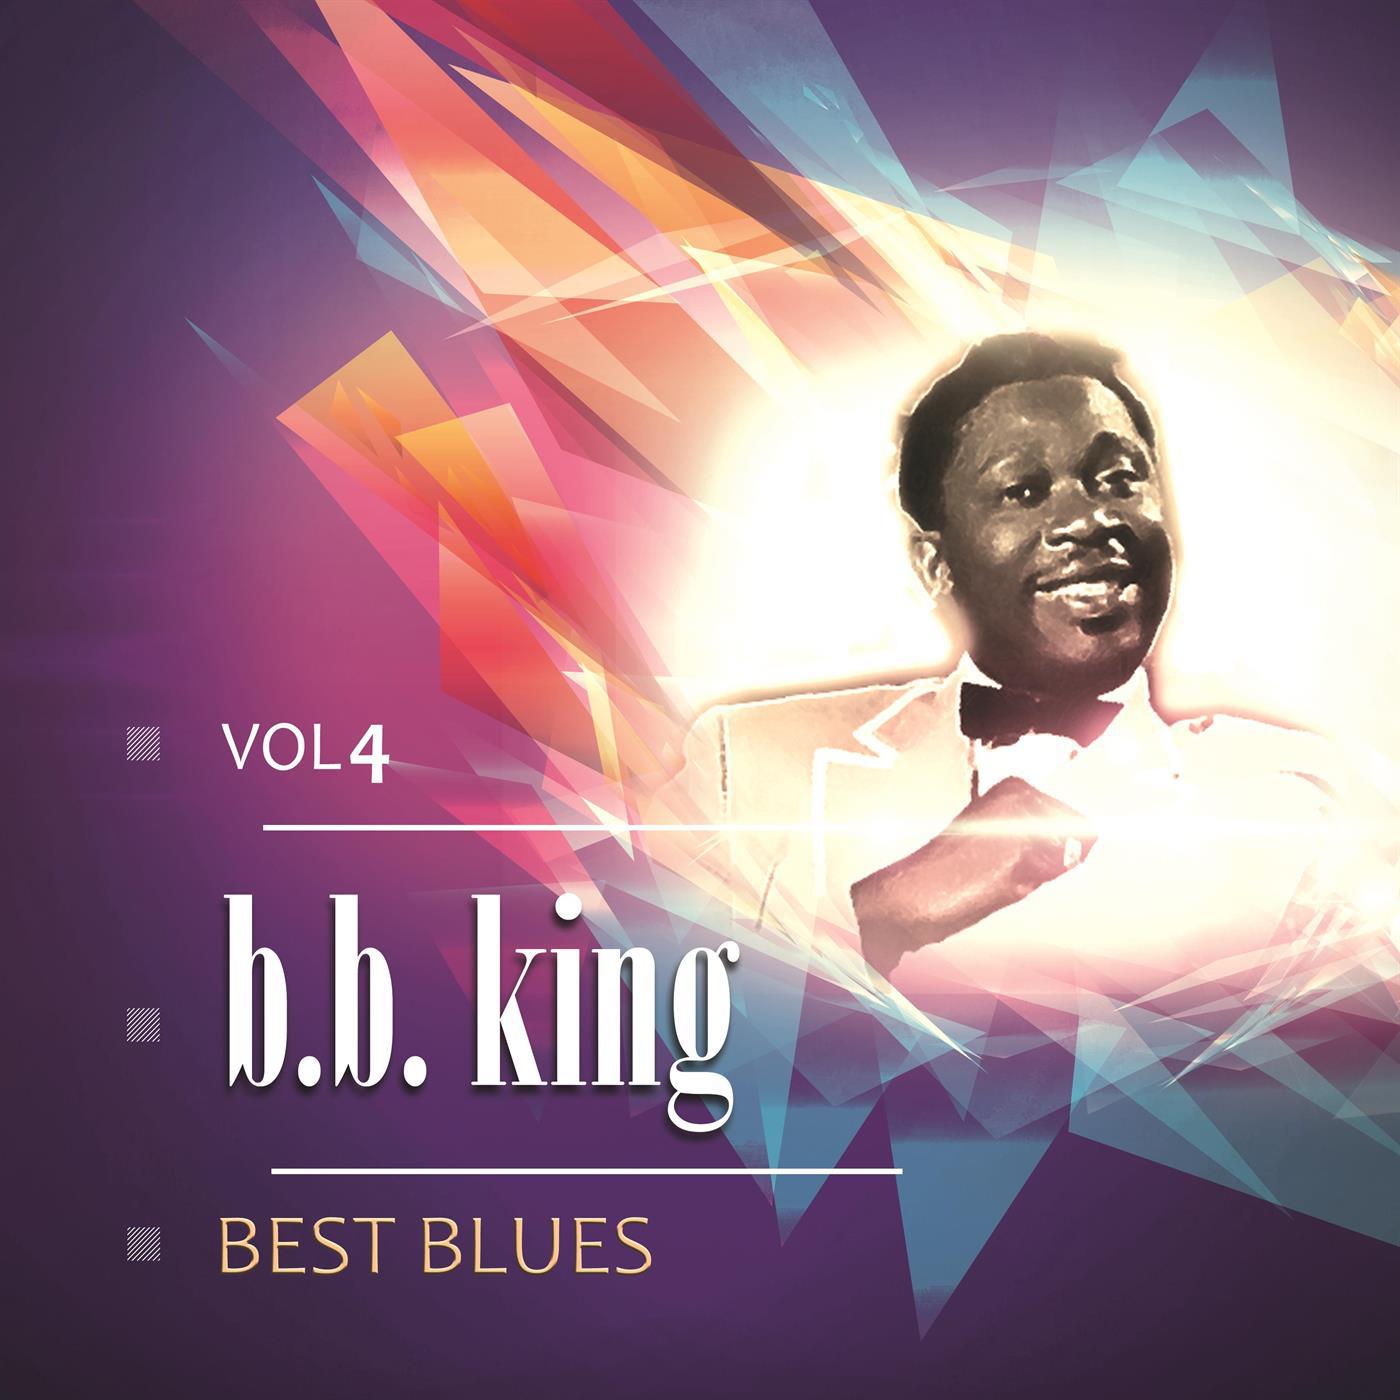 Best Blues Vol. 4